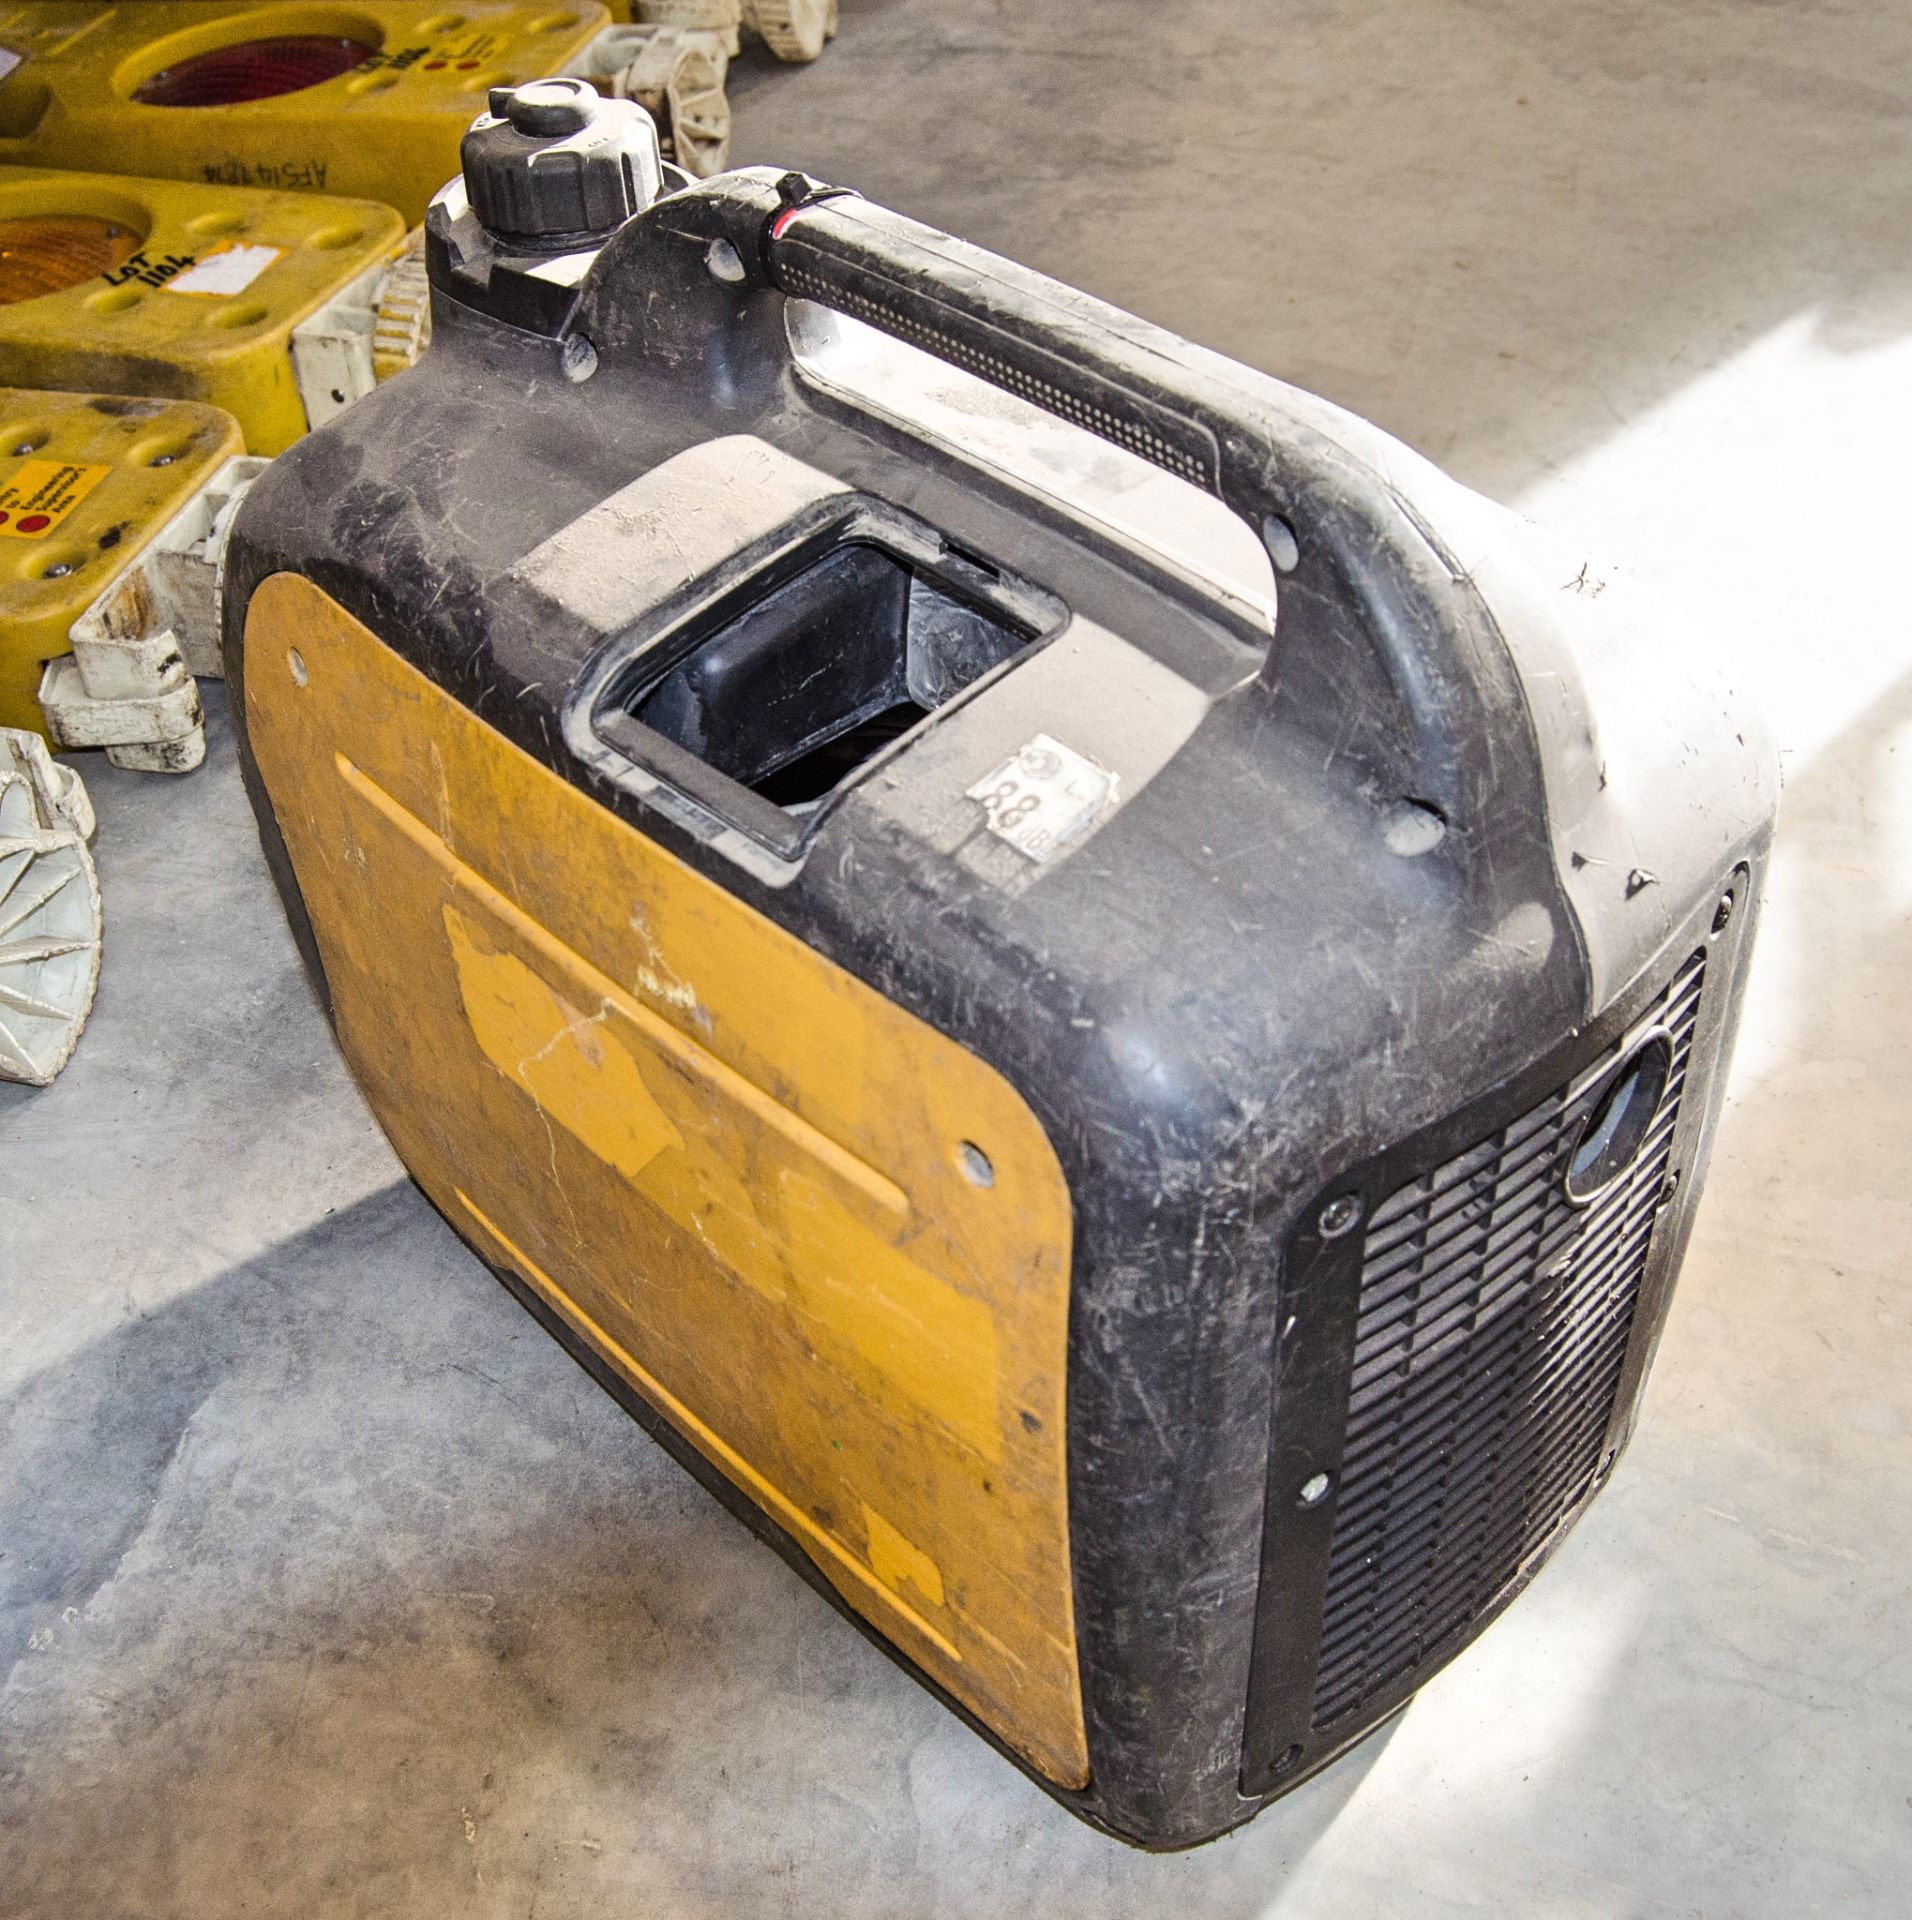 Loncin 2000i 110v petrol driven suitcase generator A989010 - Image 2 of 2